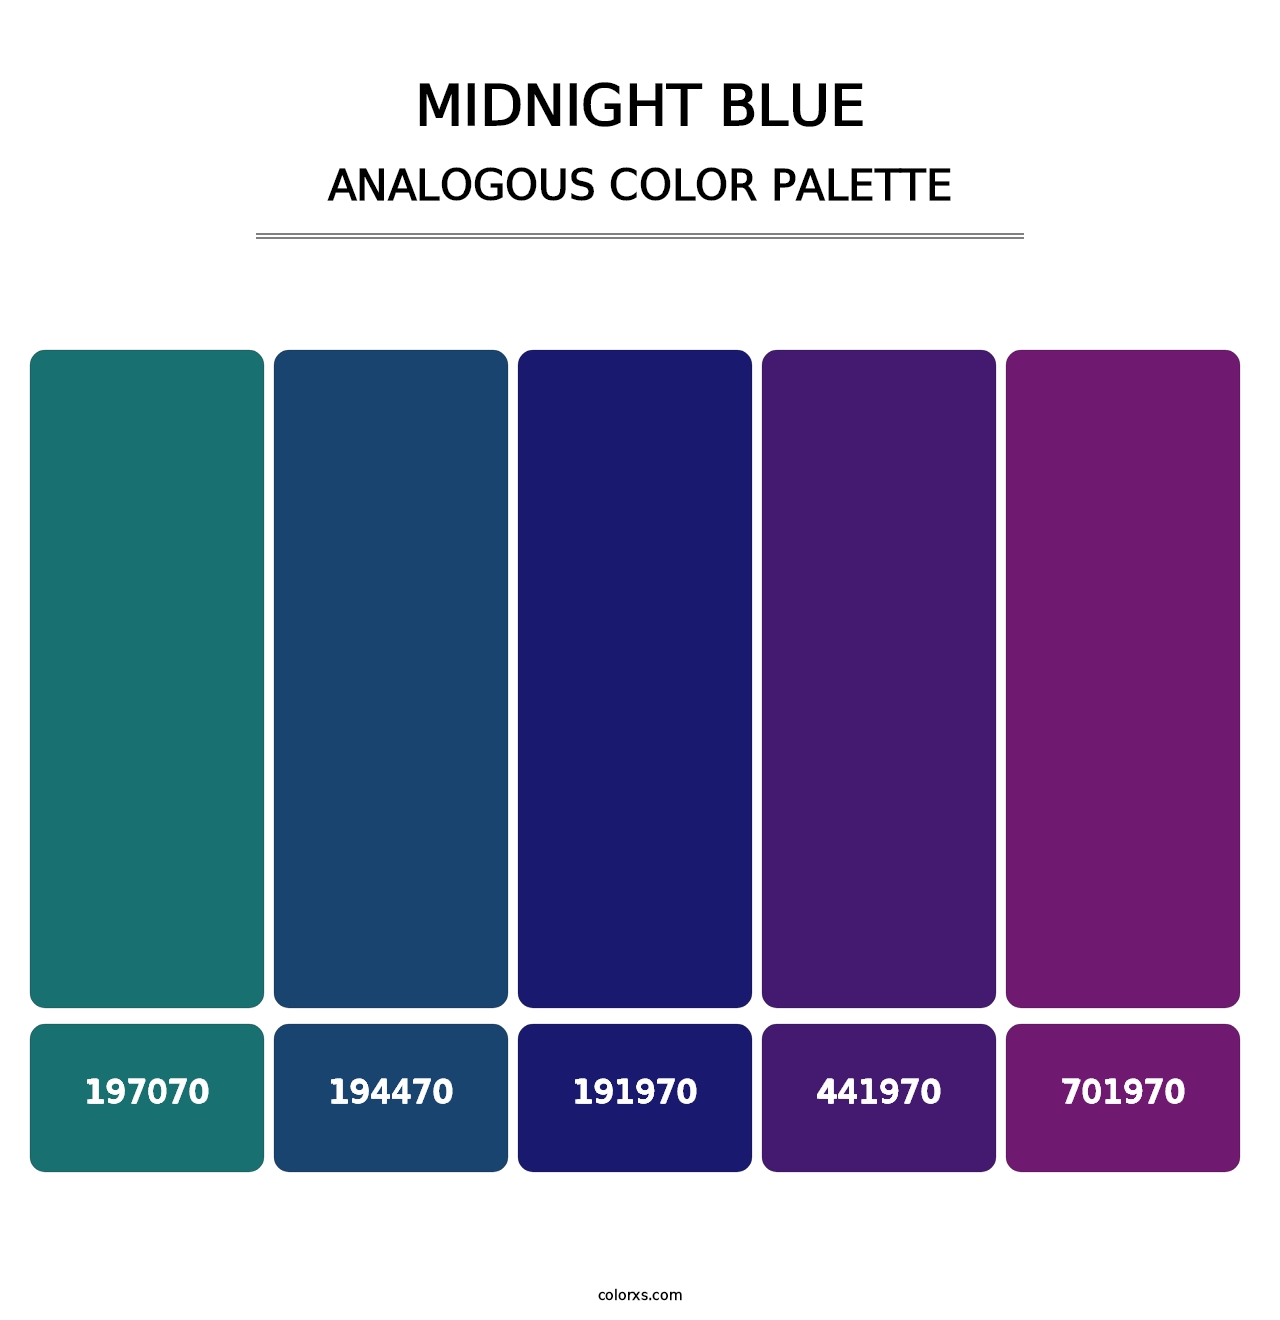 Midnight Blue - Analogous Color Palette